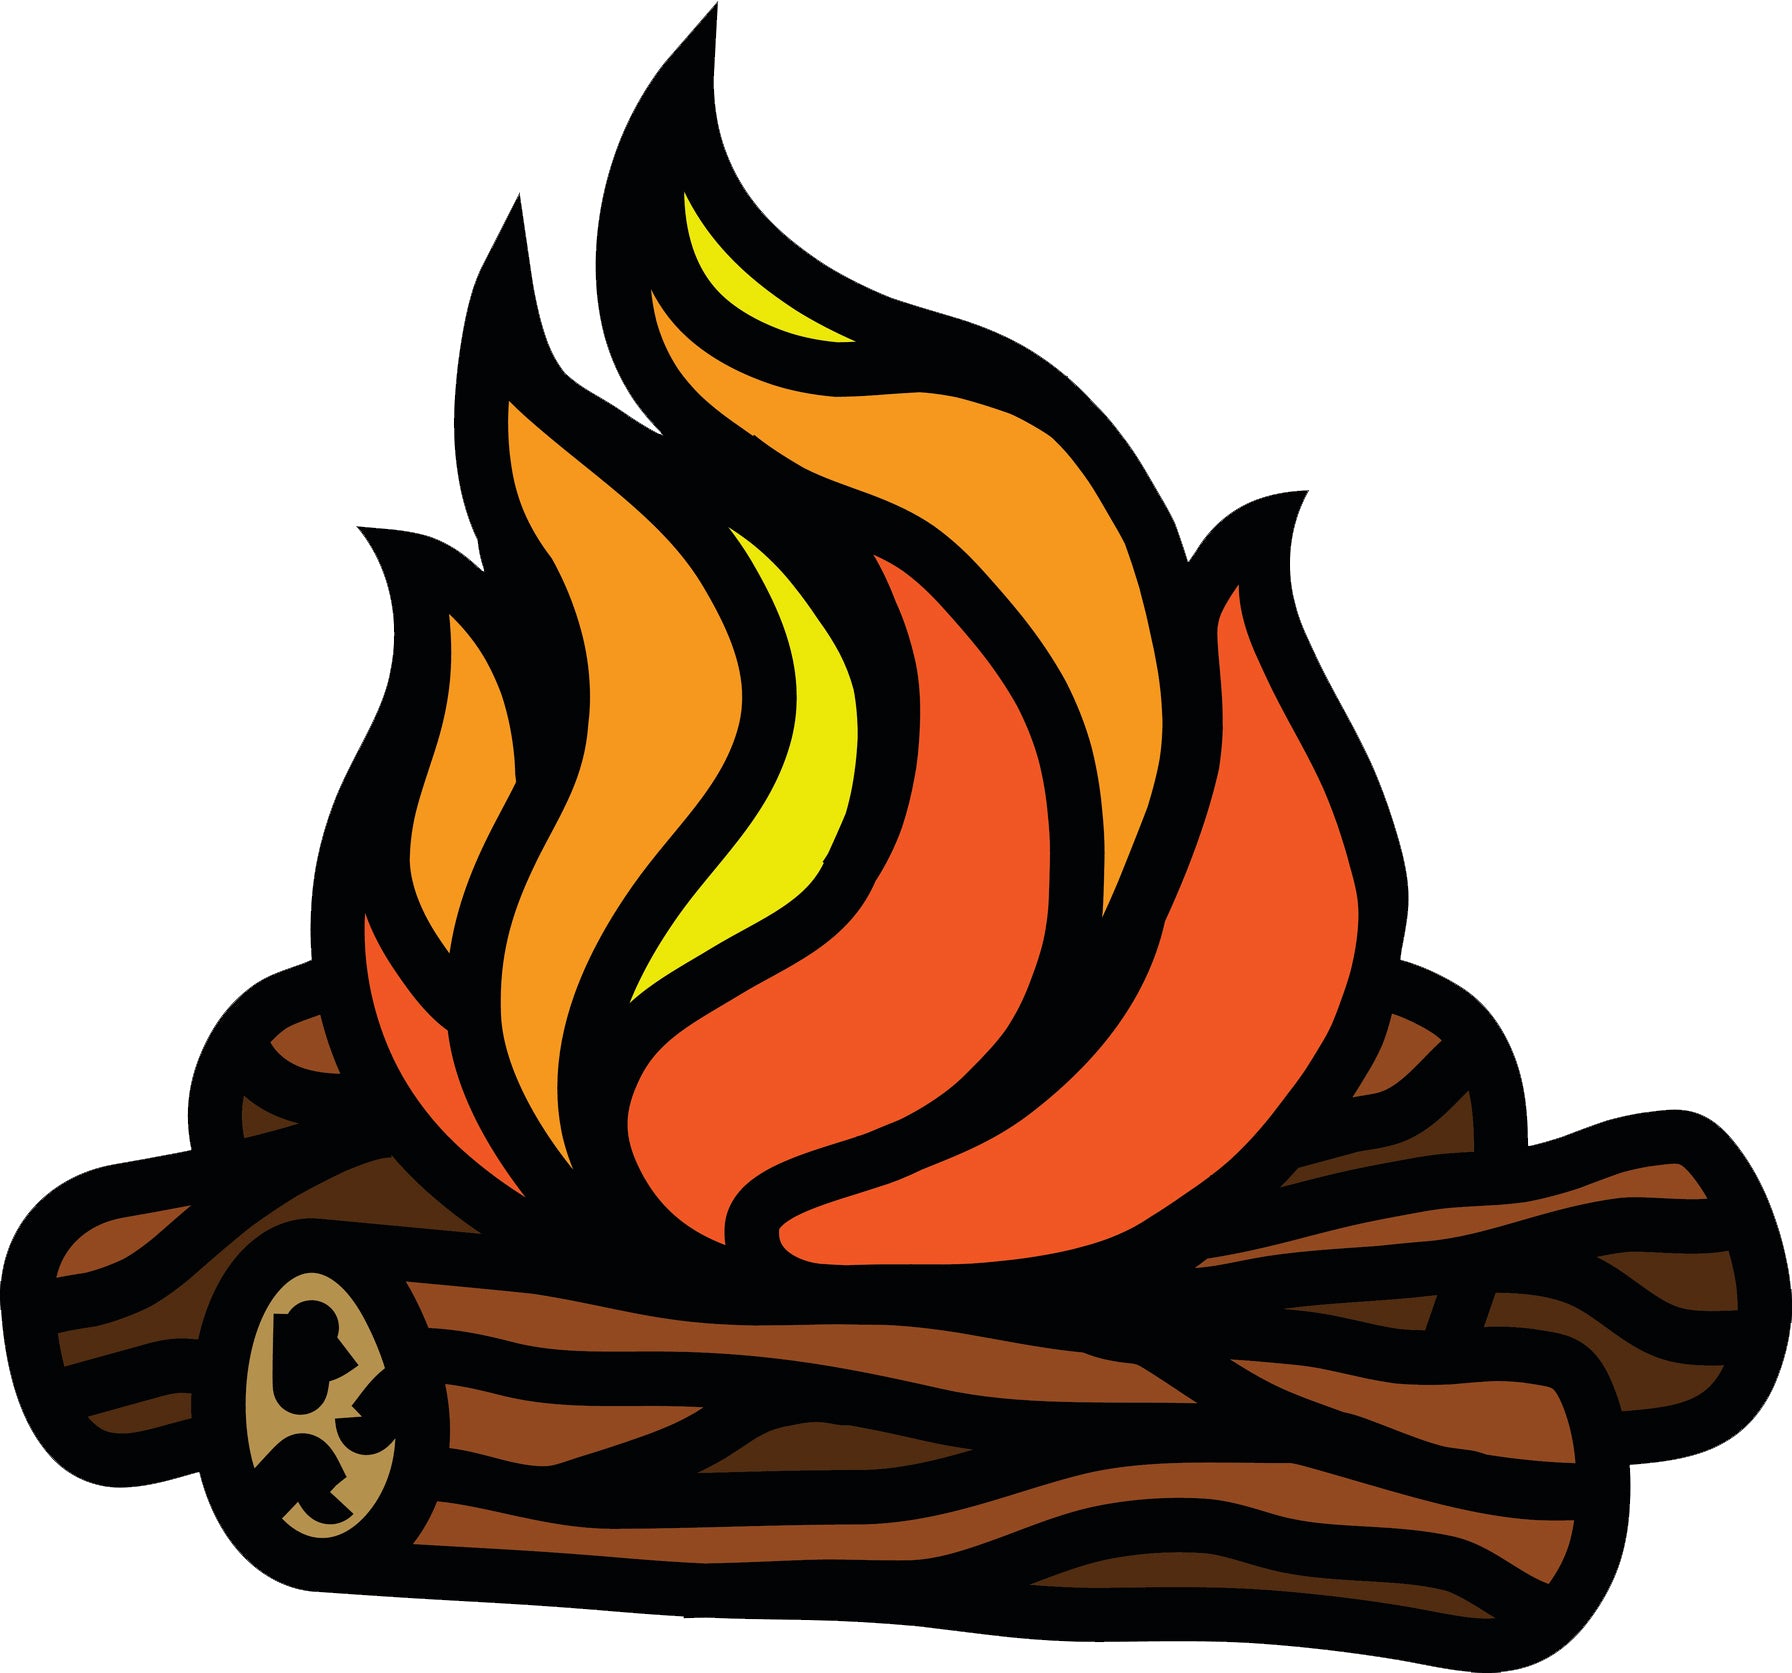 Cozy Camp Log Fire Cartoon Icon Vinyl Decal Sticker